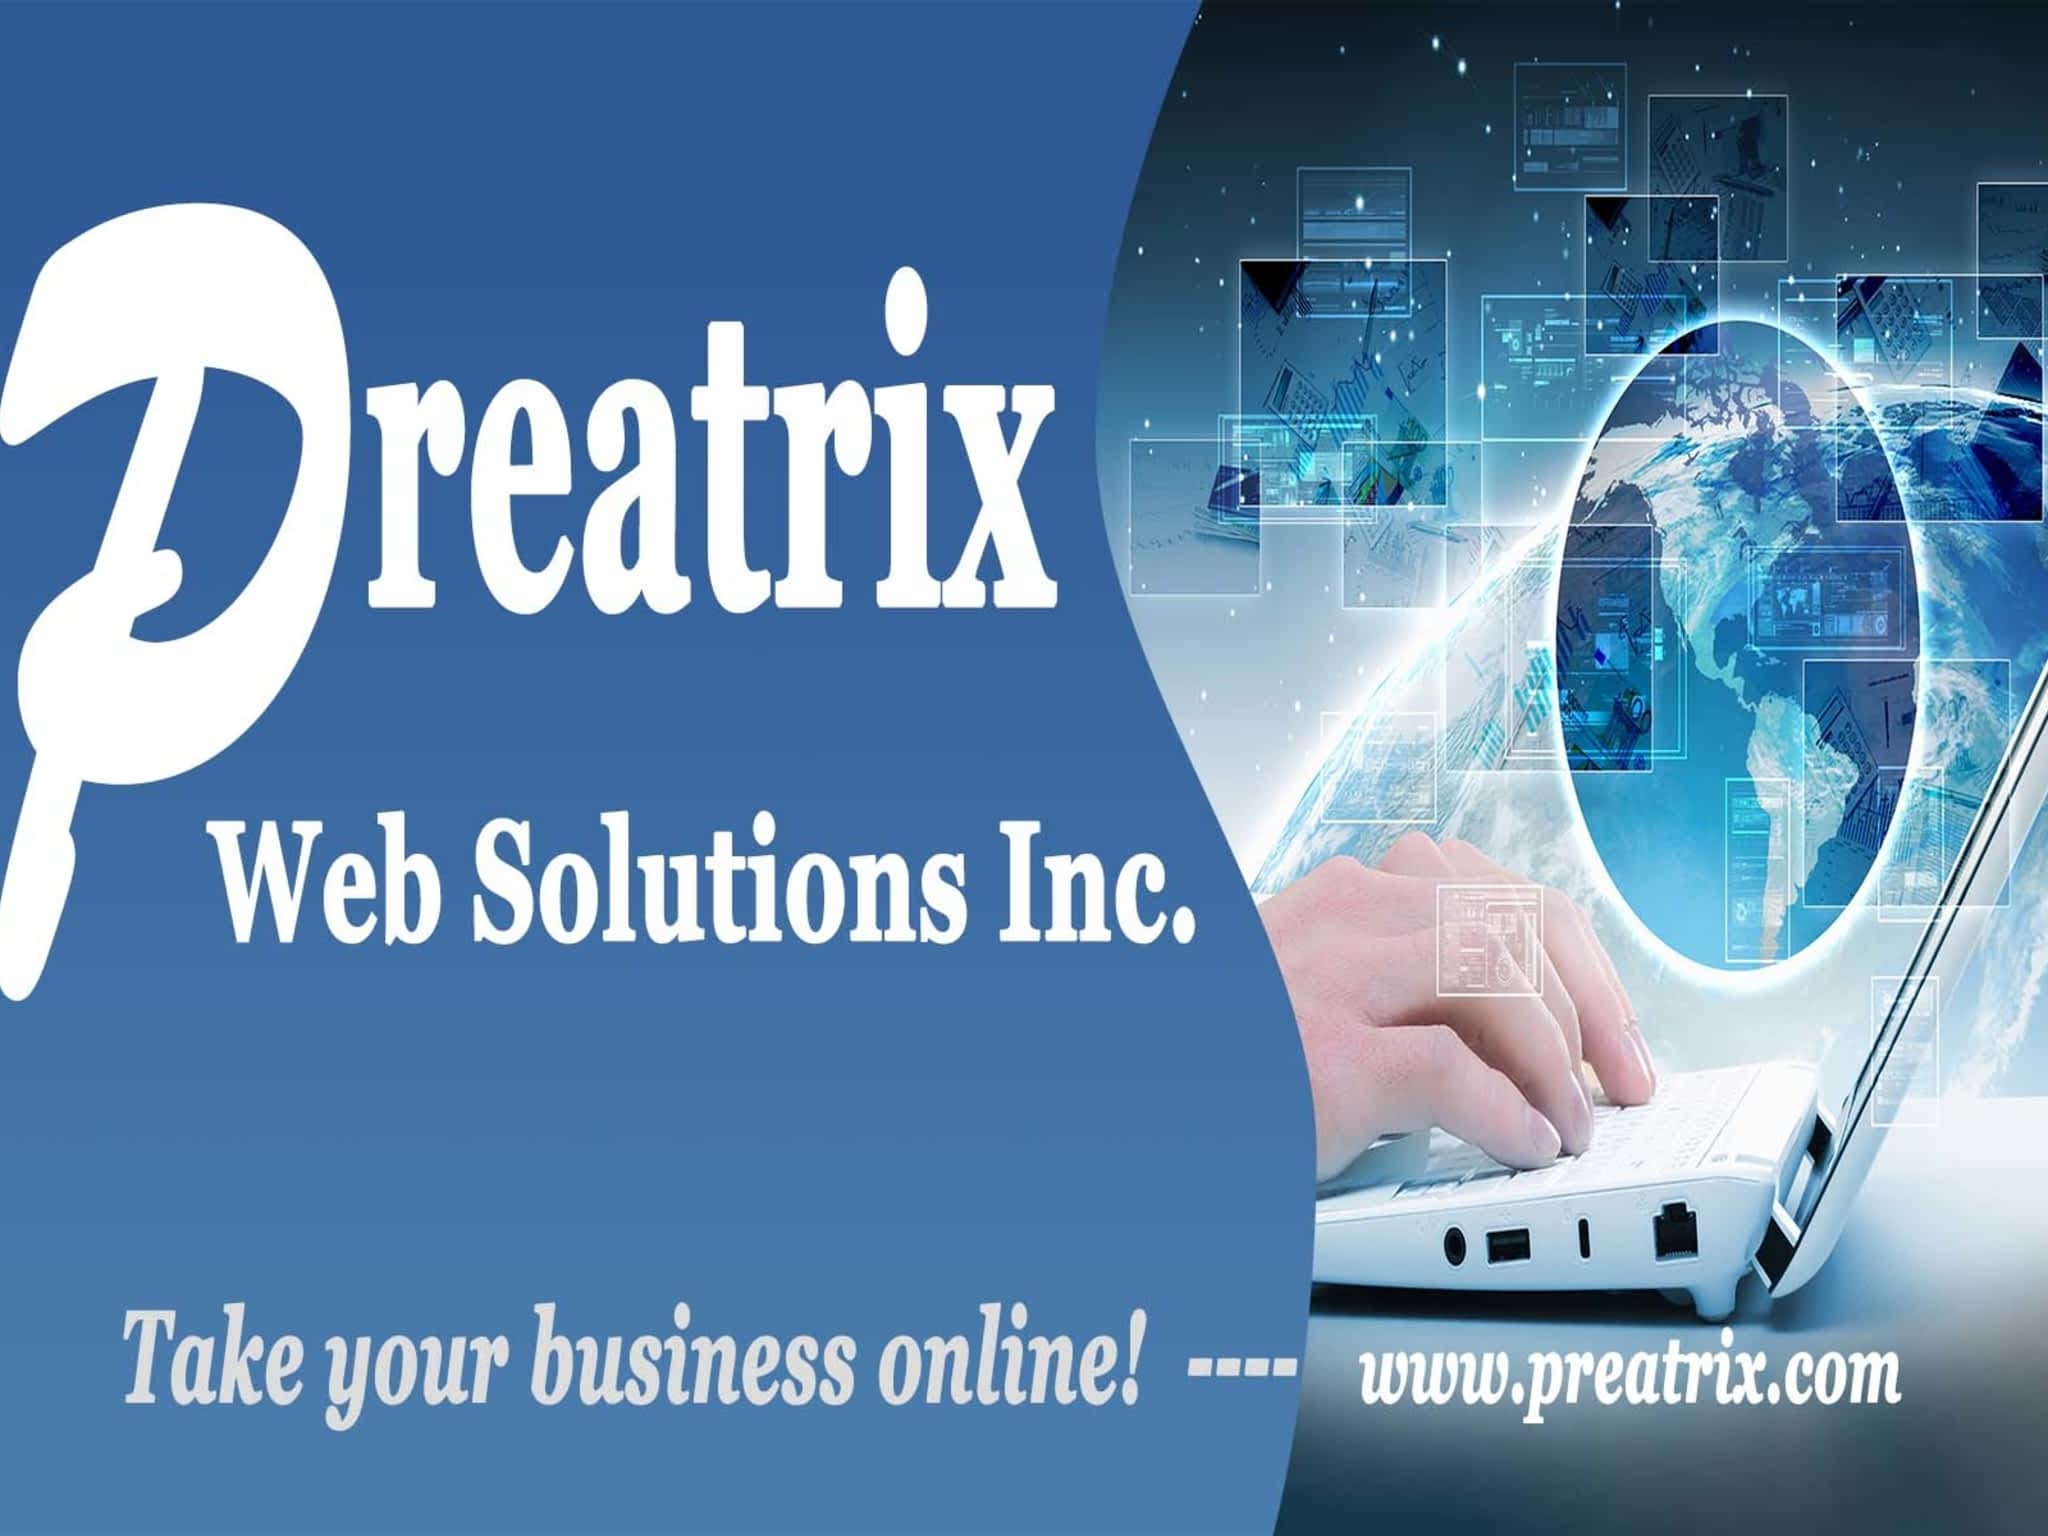 photo Preatrix Web Solution Inc